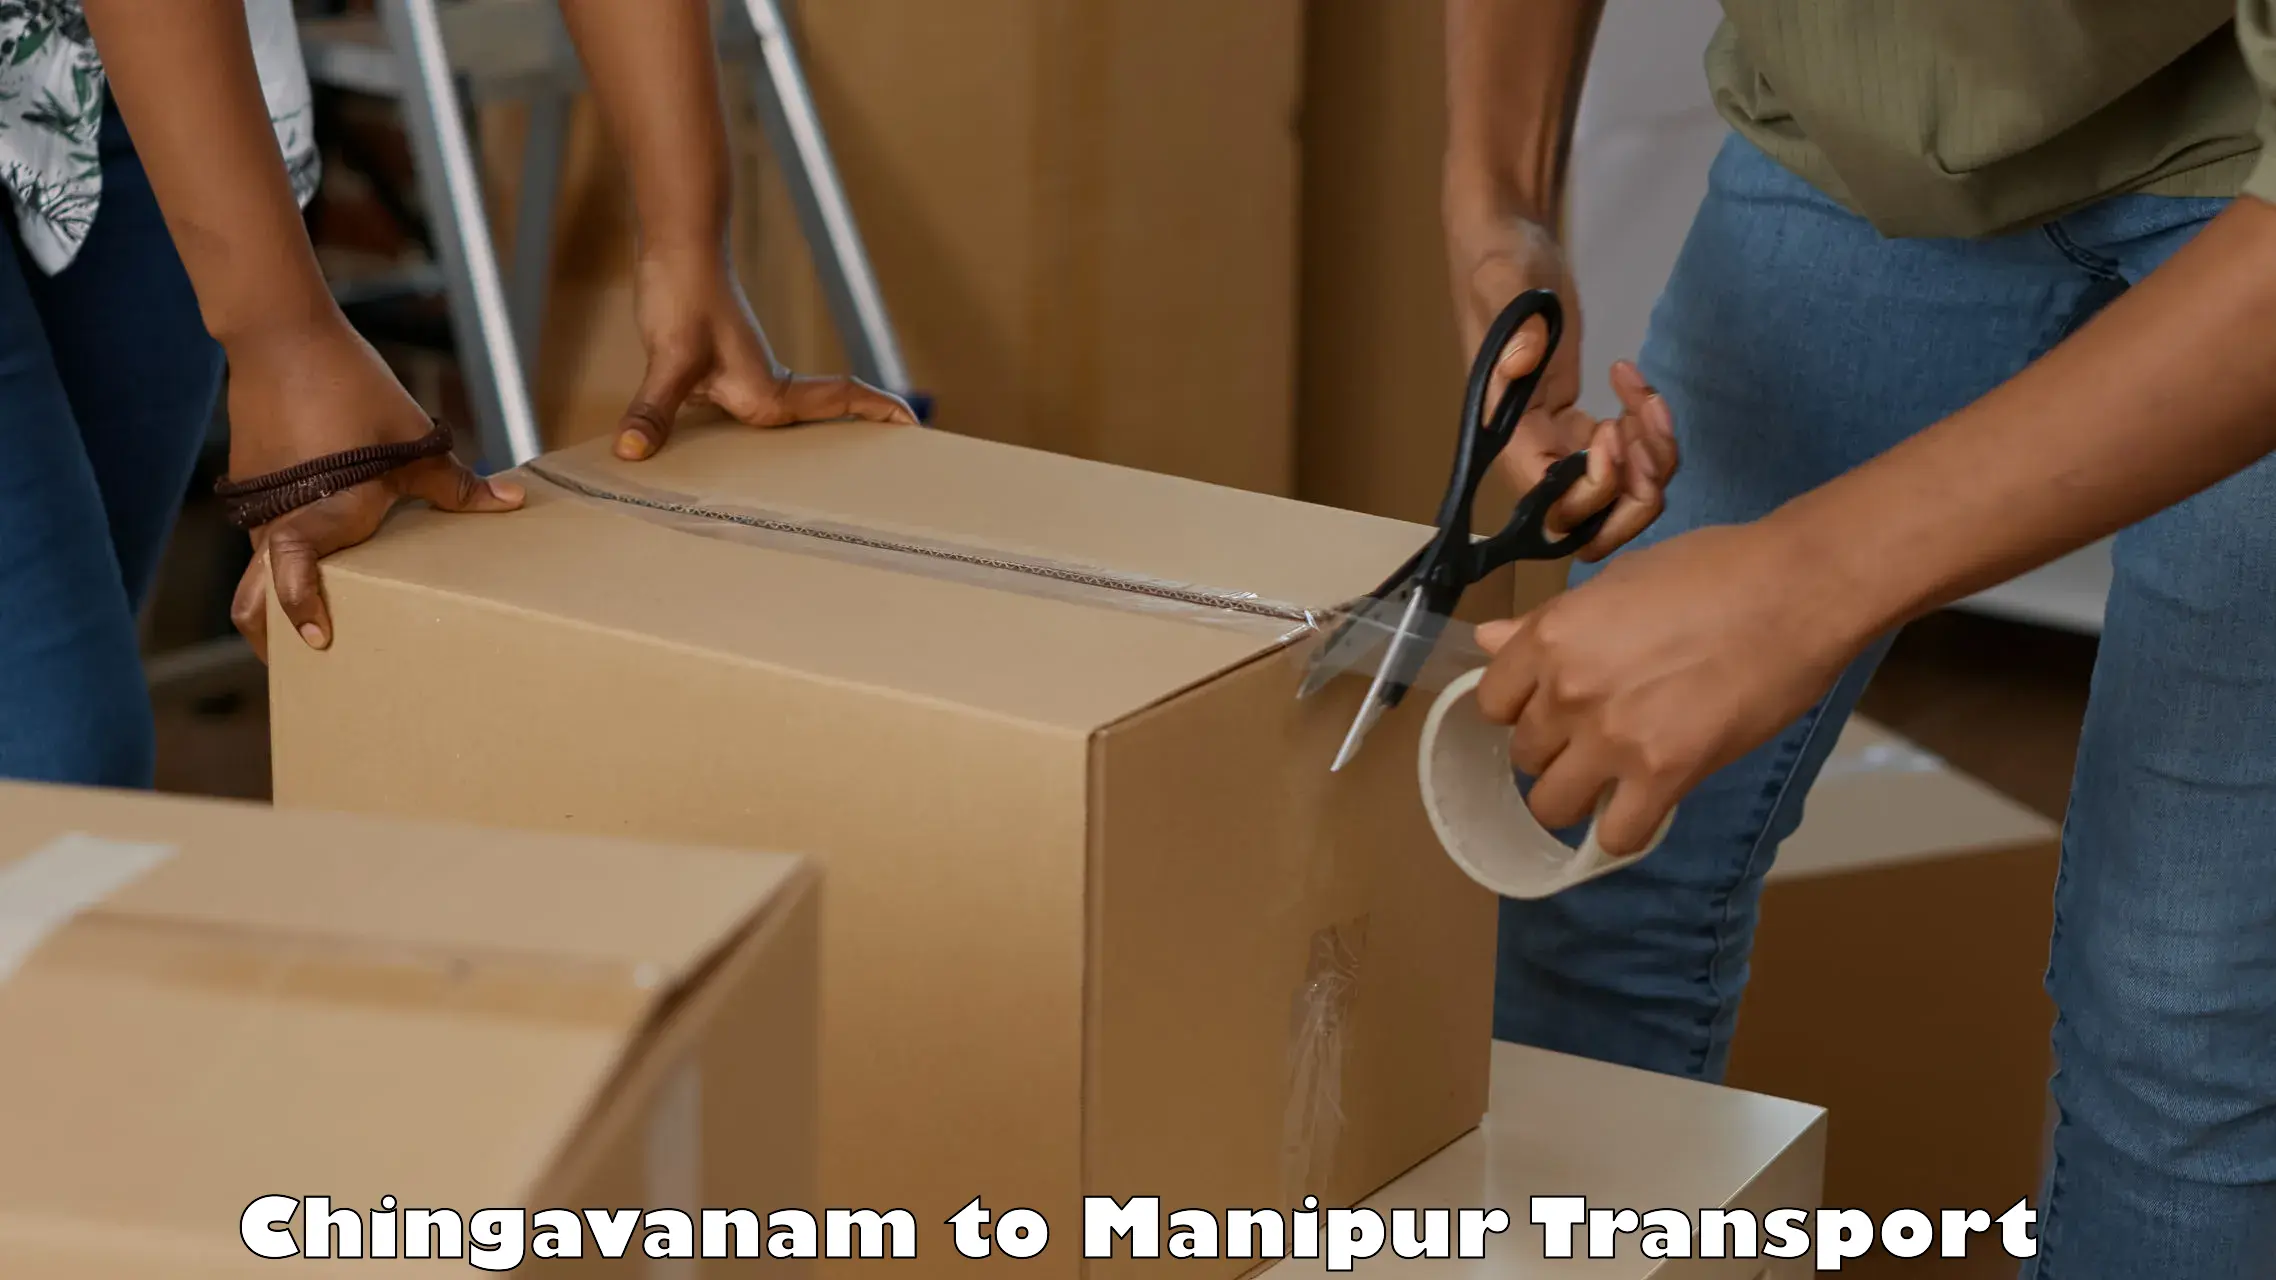 Truck transport companies in India Chingavanam to Manipur